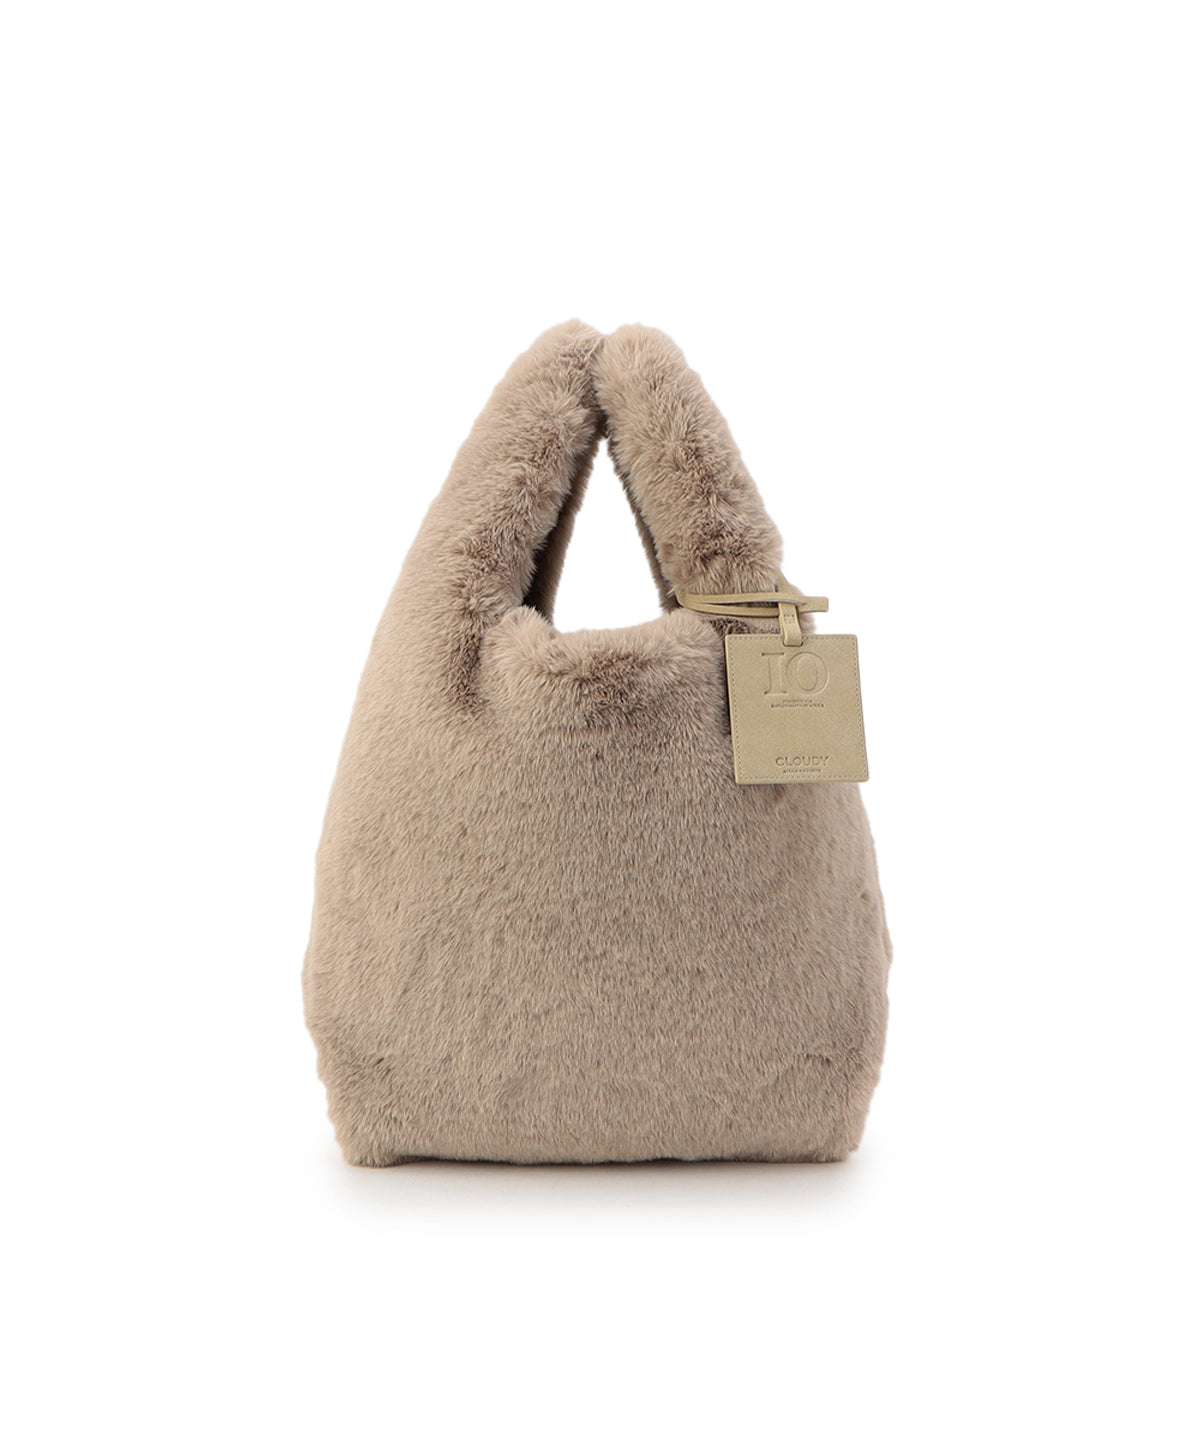 Eco Fur Convenience Bag (Small)使用1回でほぼ未使用です - ハンドバッグ